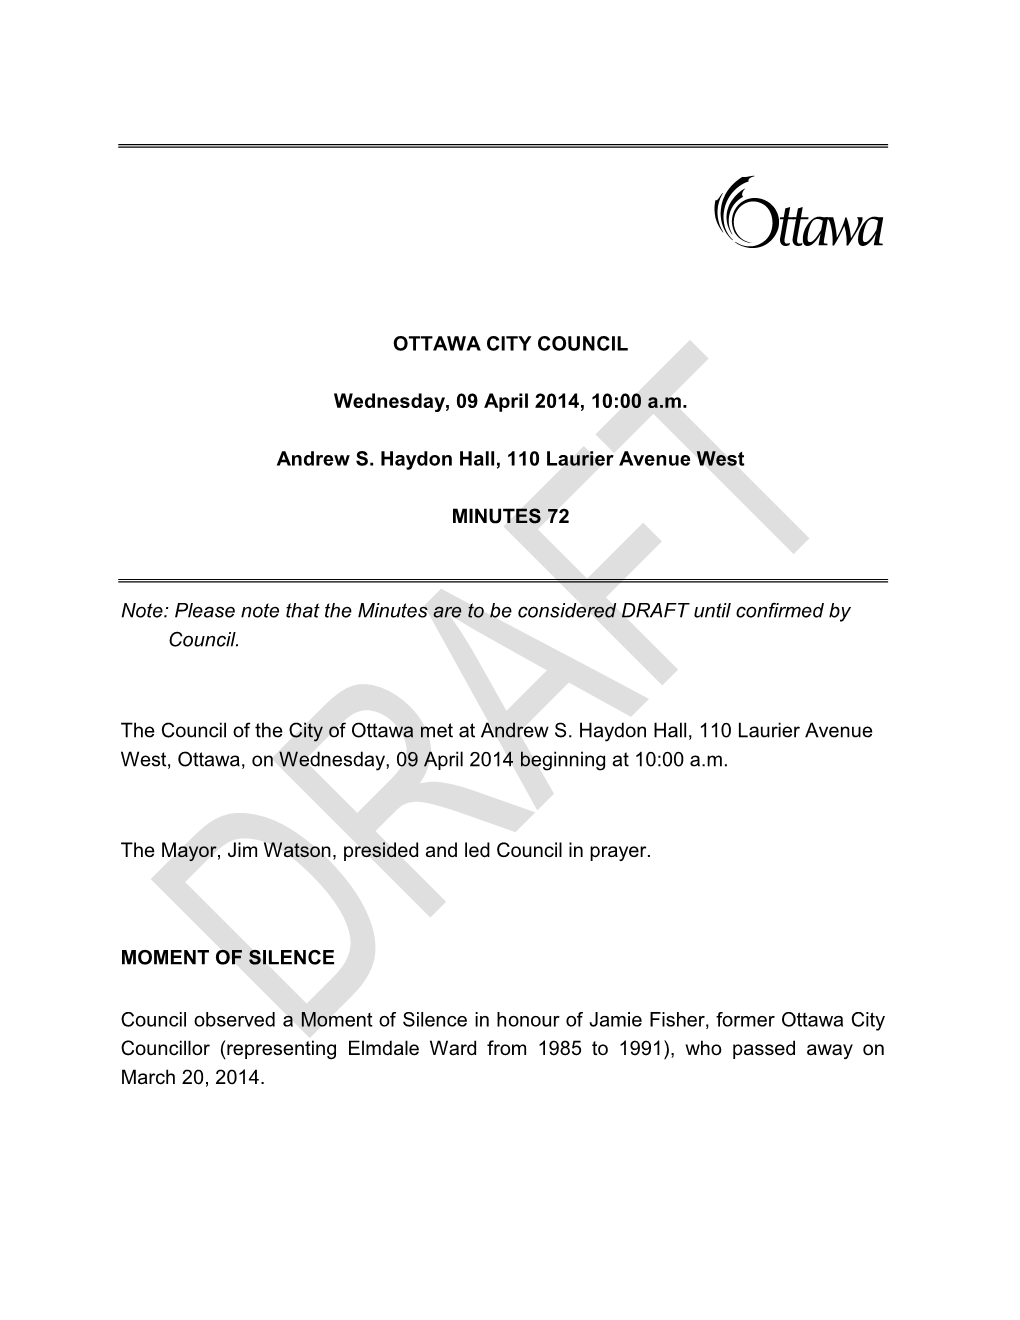 City Council Minutes